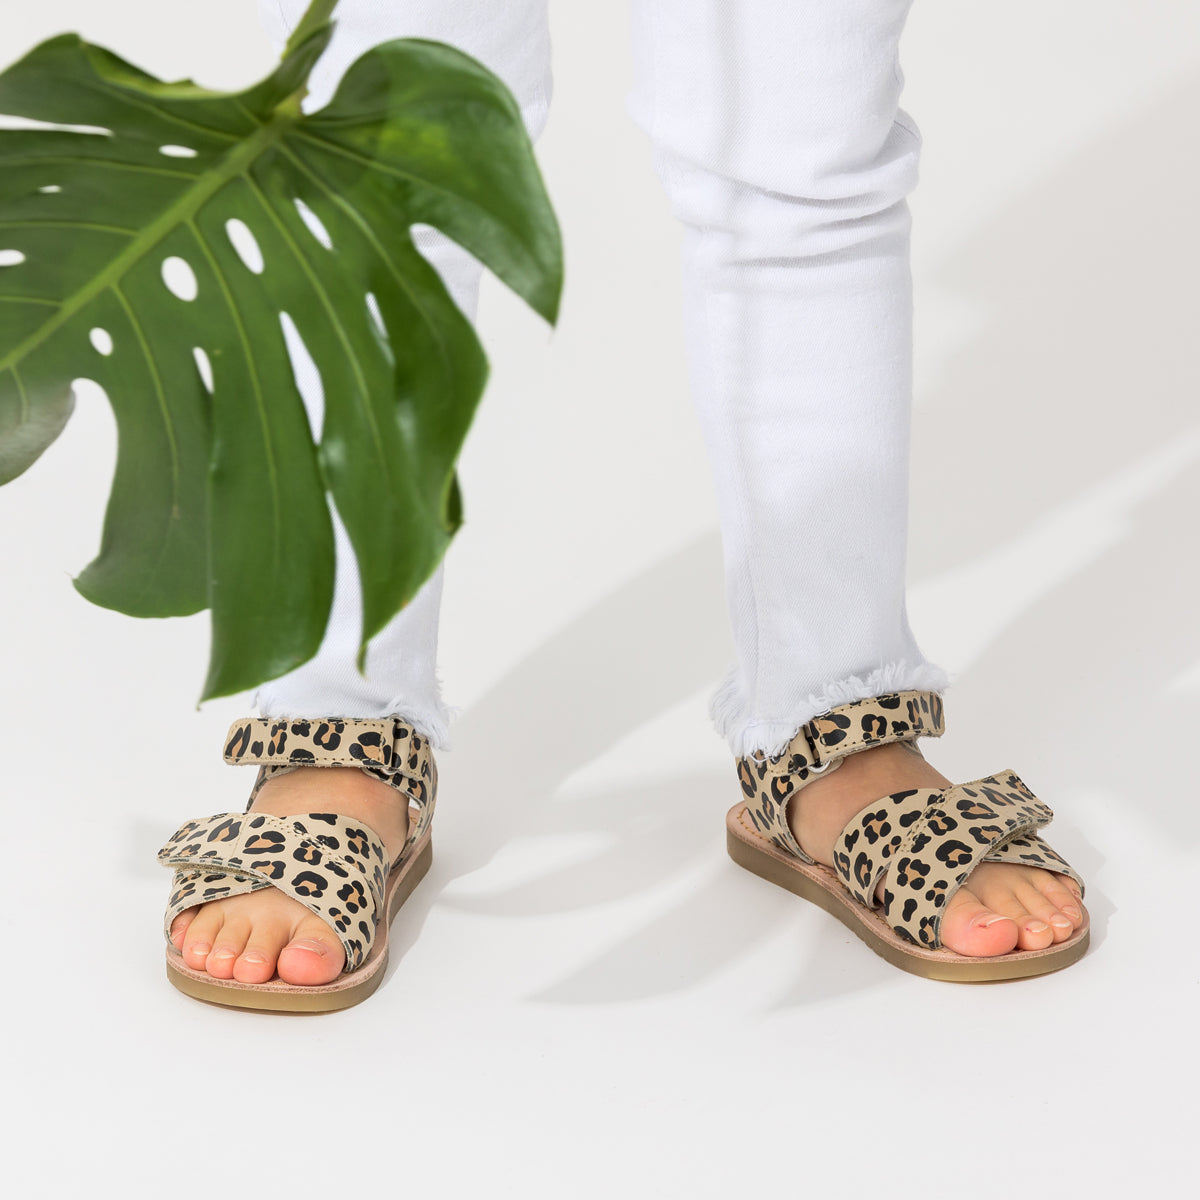 Child wearing leopard print sandals